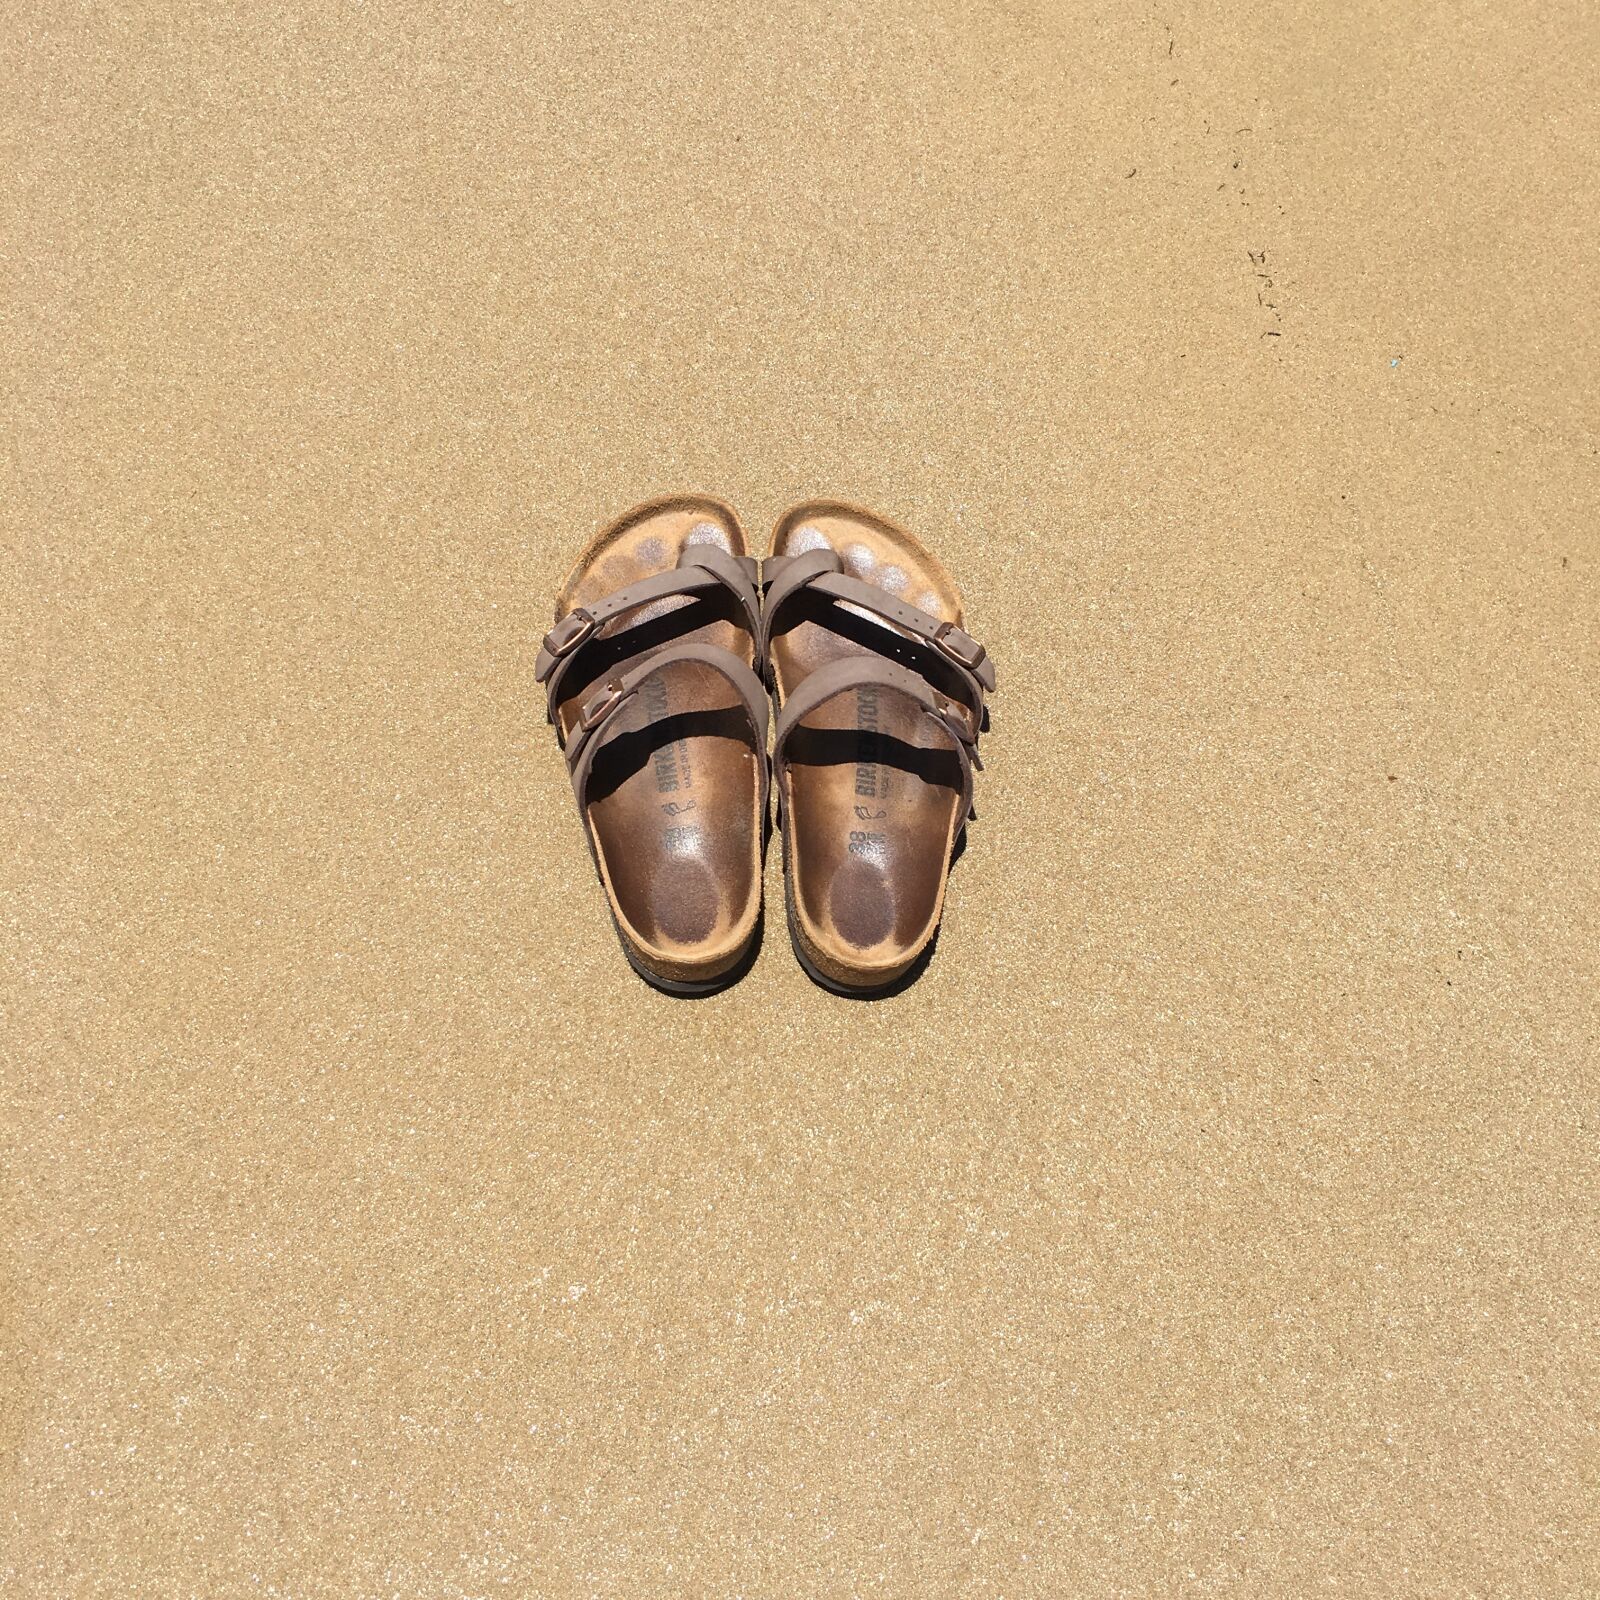 iPhone 6s back camera 4.15mm f/2.2 sample photo. Shoes, sand, beachwalks photography